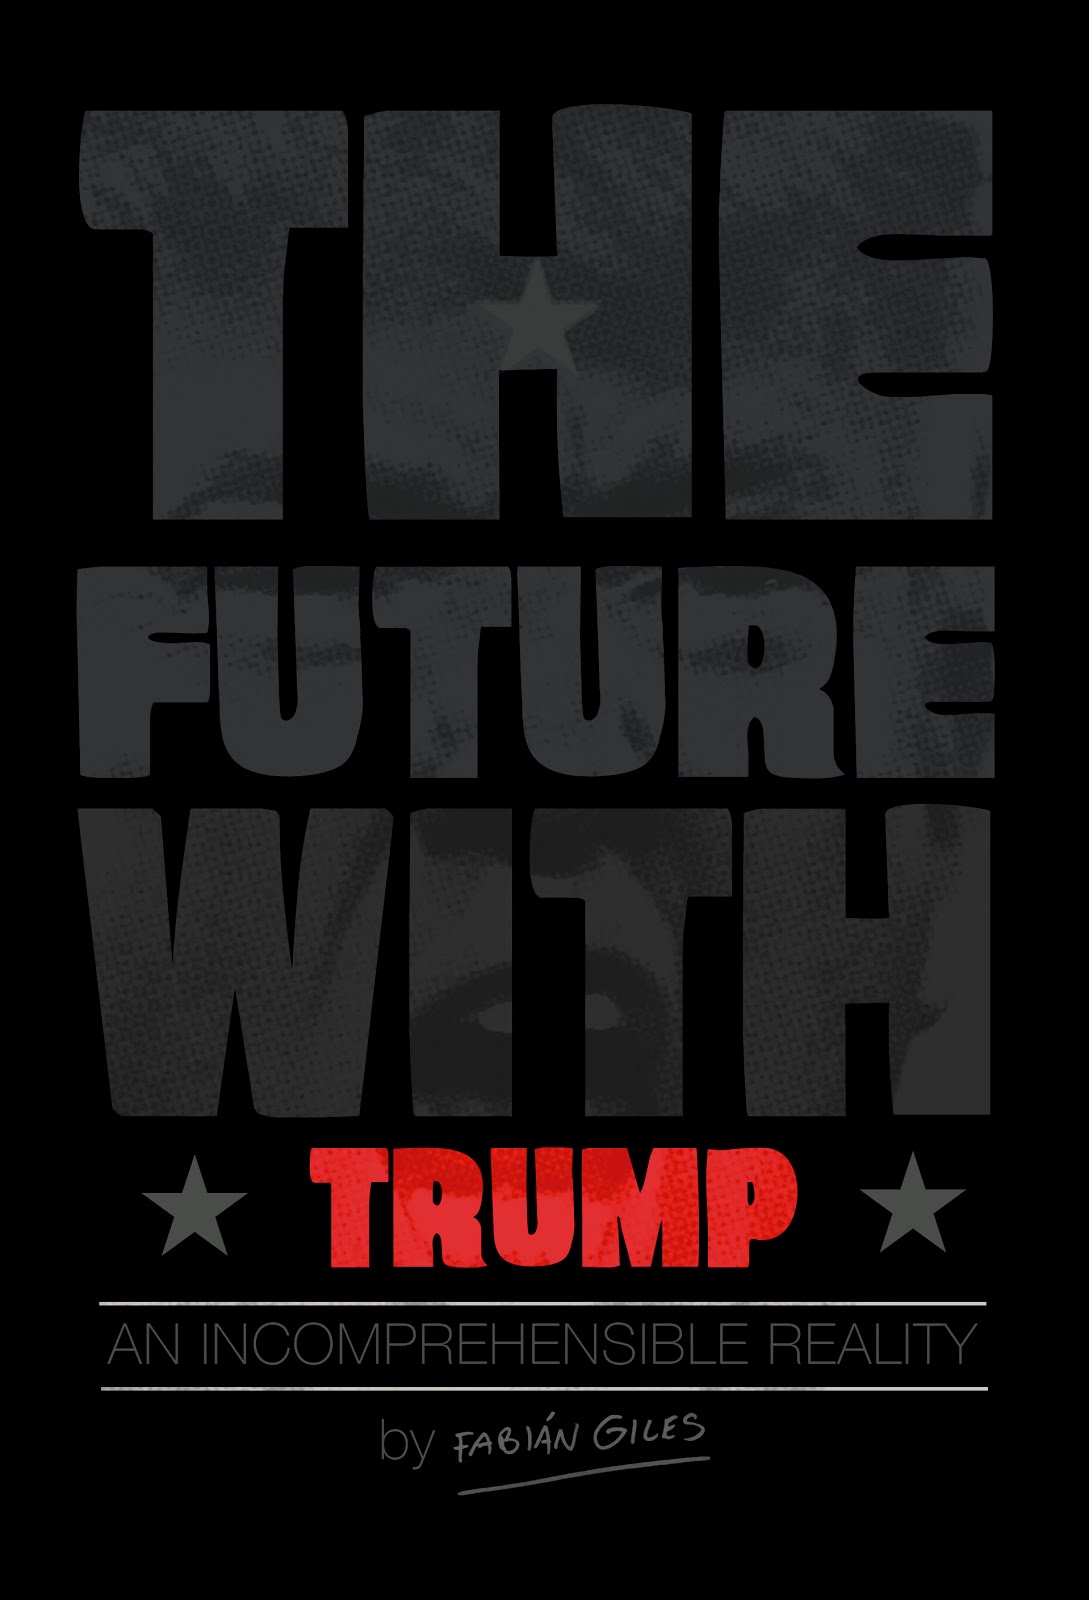 THE #FutureWithTrump